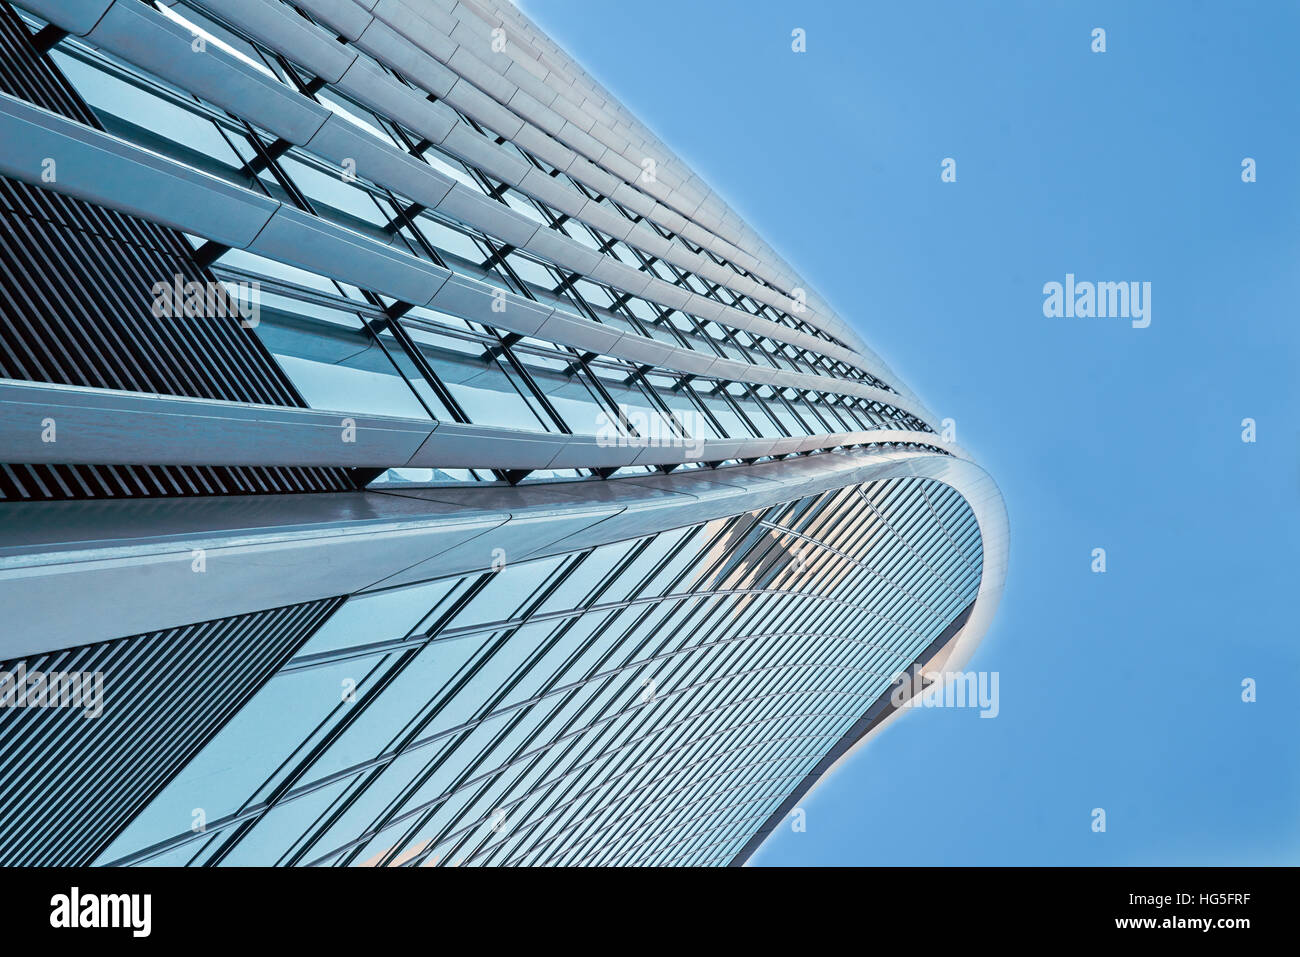 Walkie-Talkie Gebäude, London.  Glas und Stahl Gebäude. International style Stockfoto